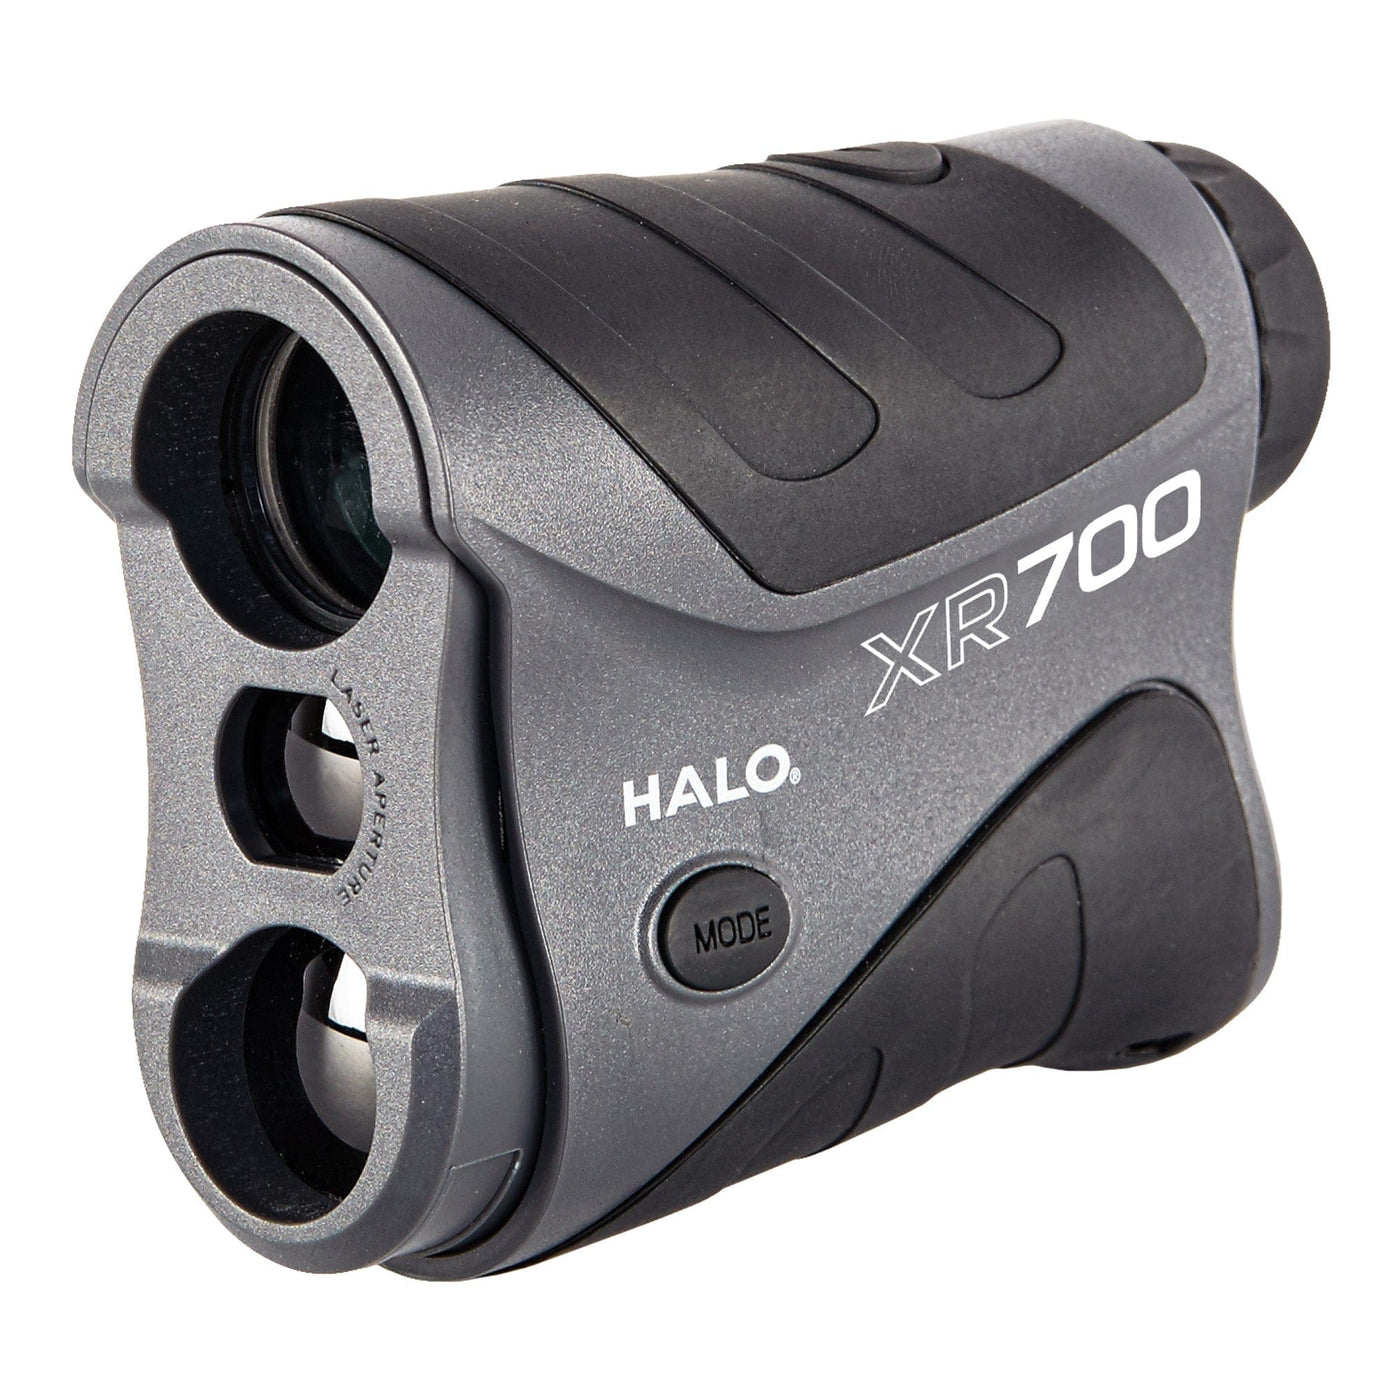 Halo Halo Xr700 Rangefinder 700 Yd. Optics and Accessories